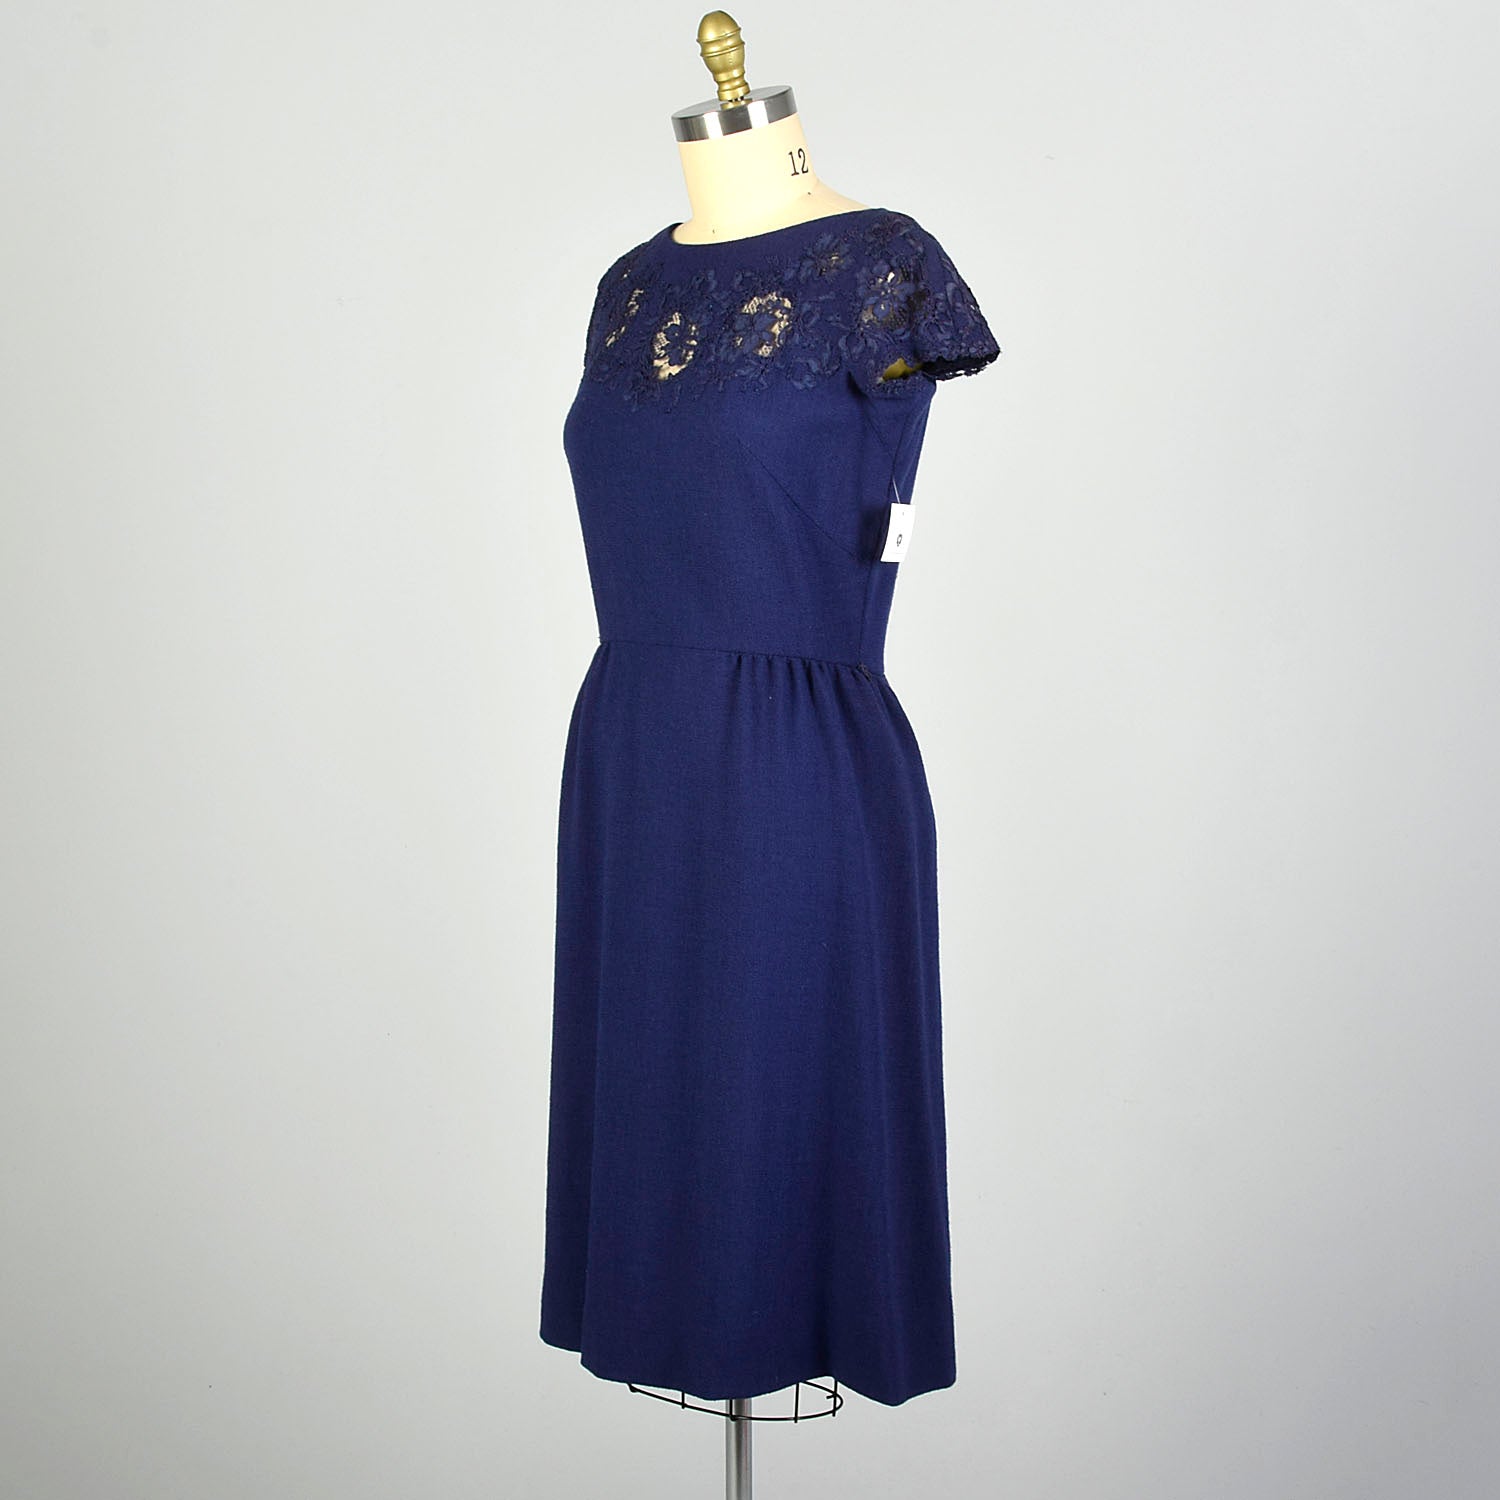 Large 1950s Blue Knit Dress with Lace Neckline Monochrome Harvey Berin